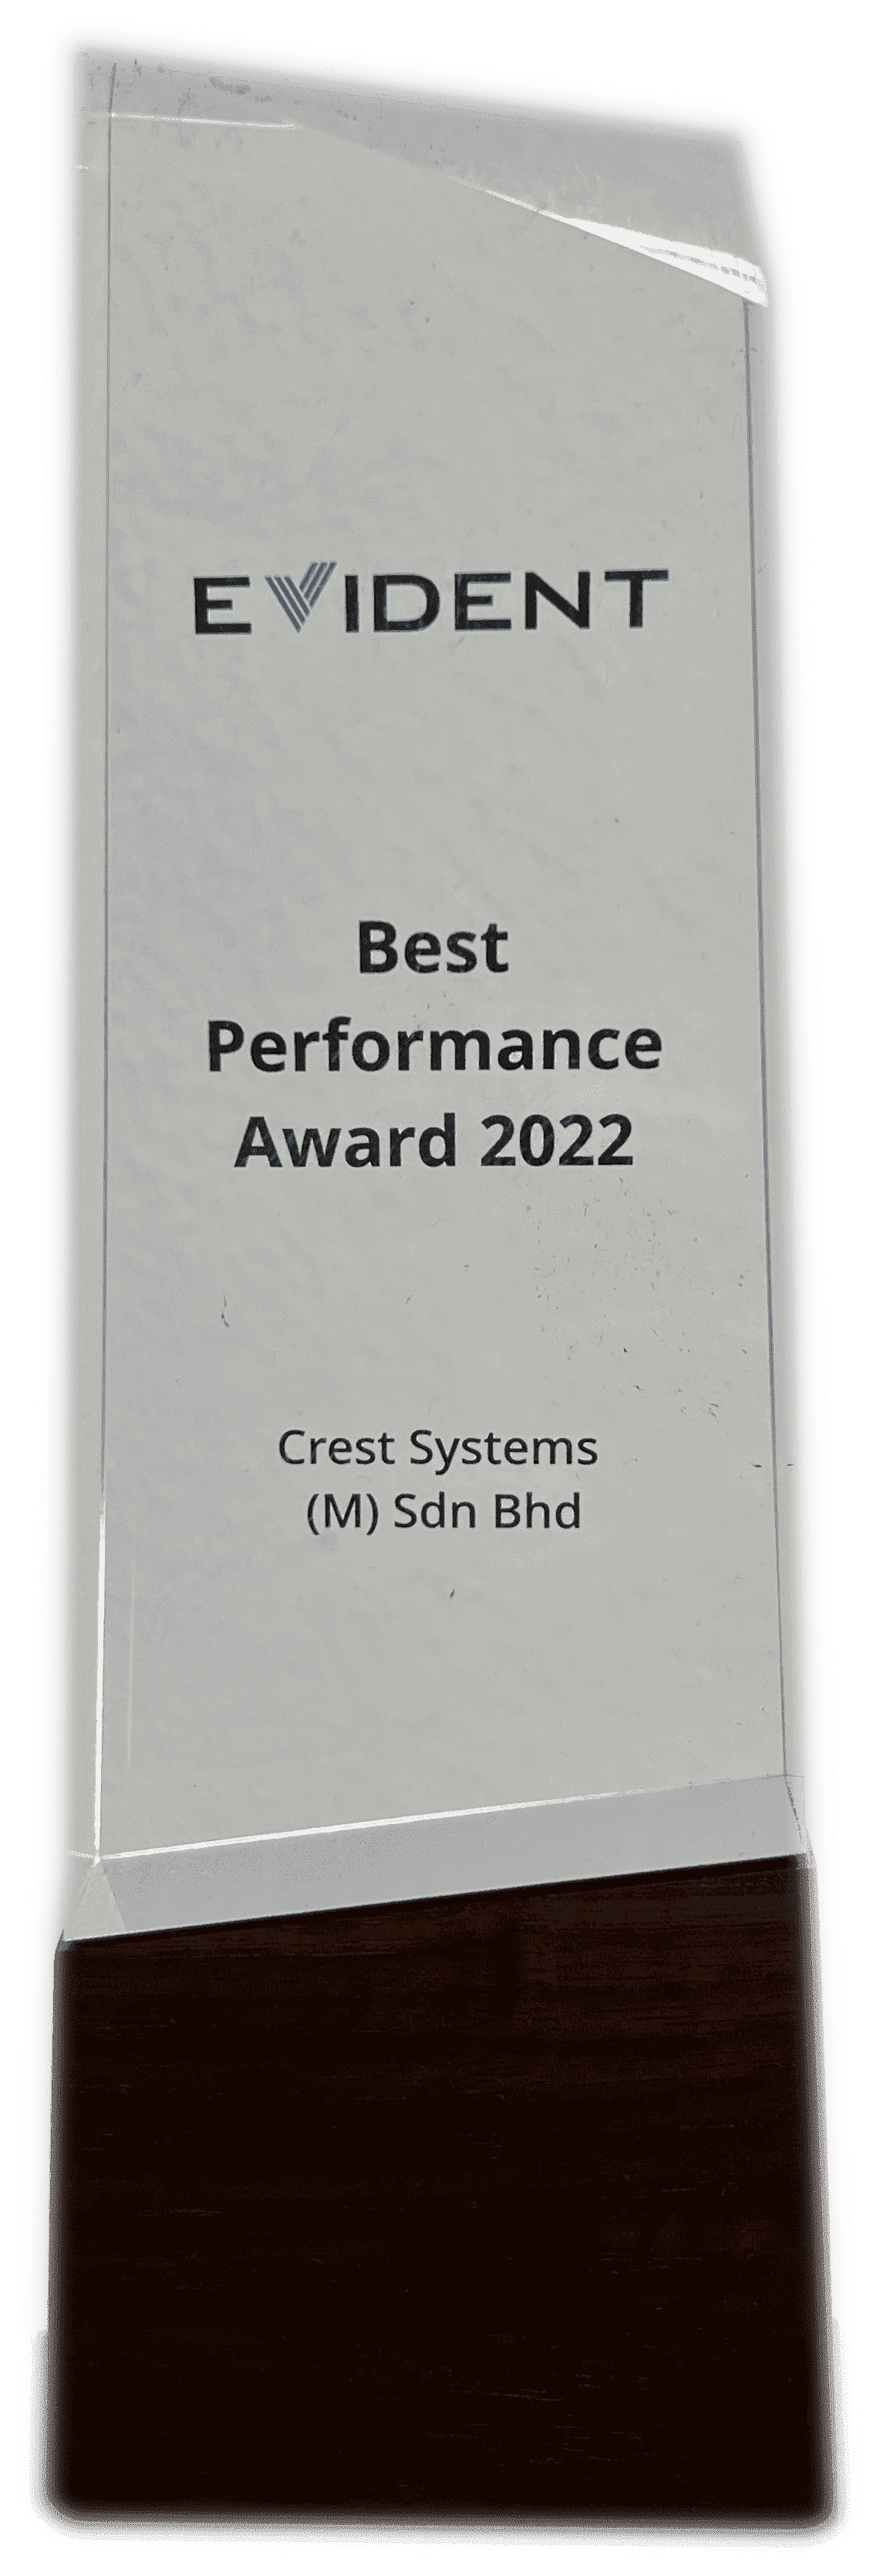 Best Performance Award 2022